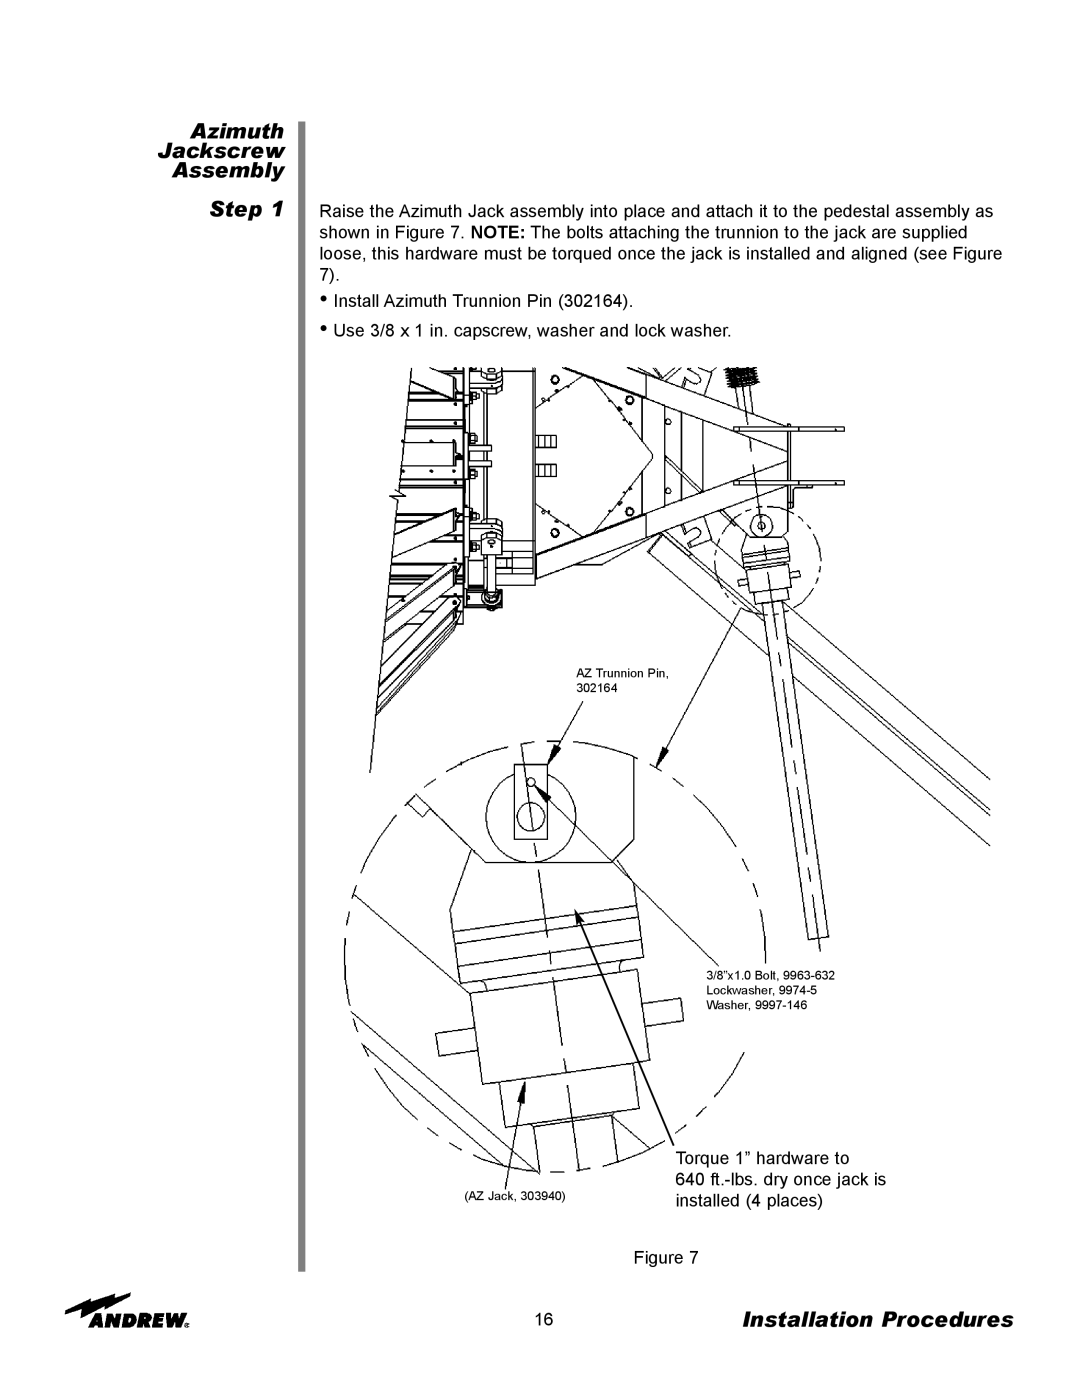 Andrew ES76PK-1 installation instructions Azimuth Jackscrew Assembly Step, Installation Procedures 